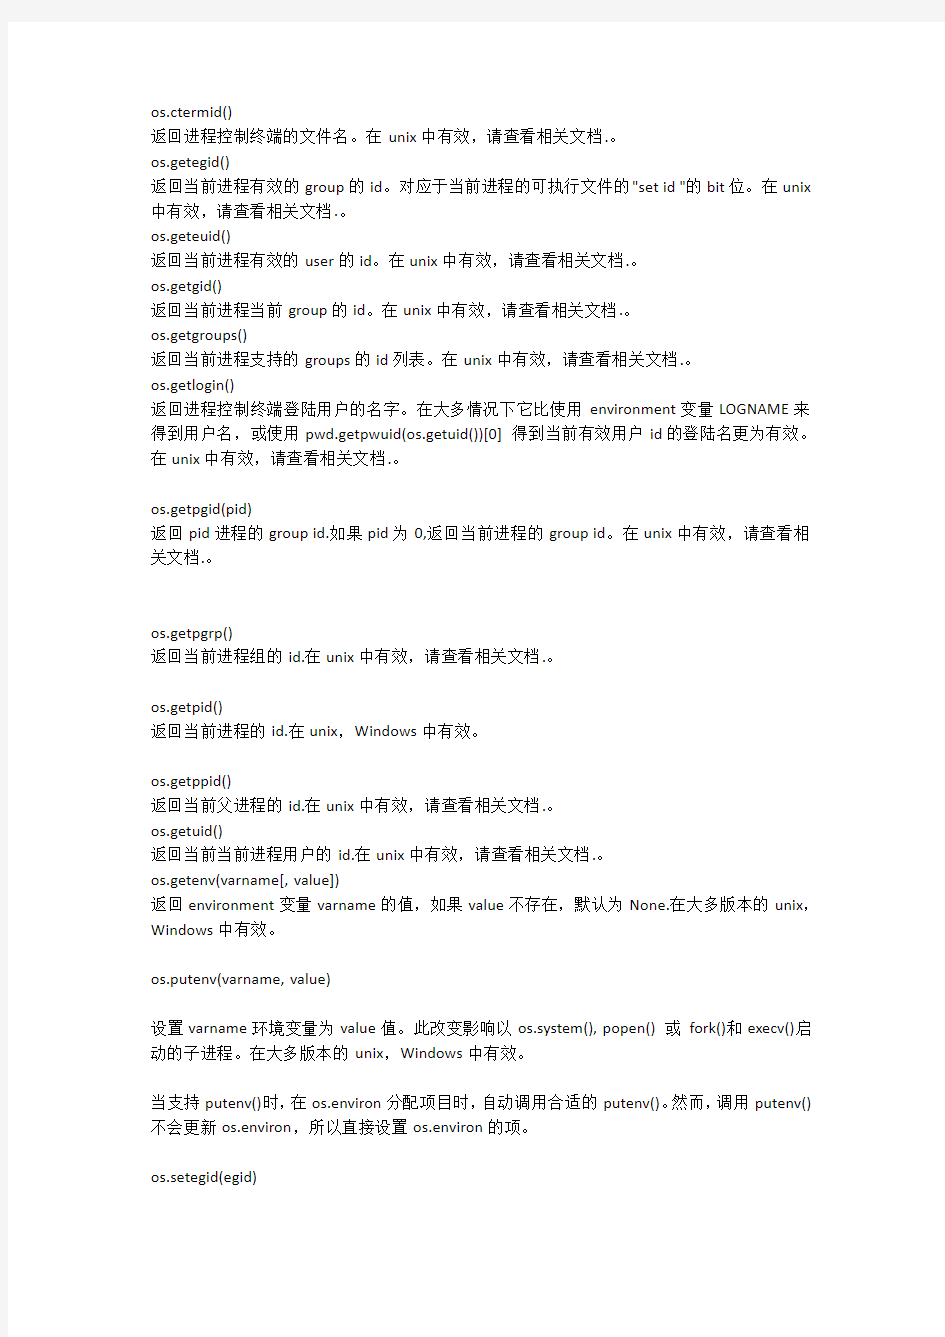 PYTHON OS模块中文帮助文档